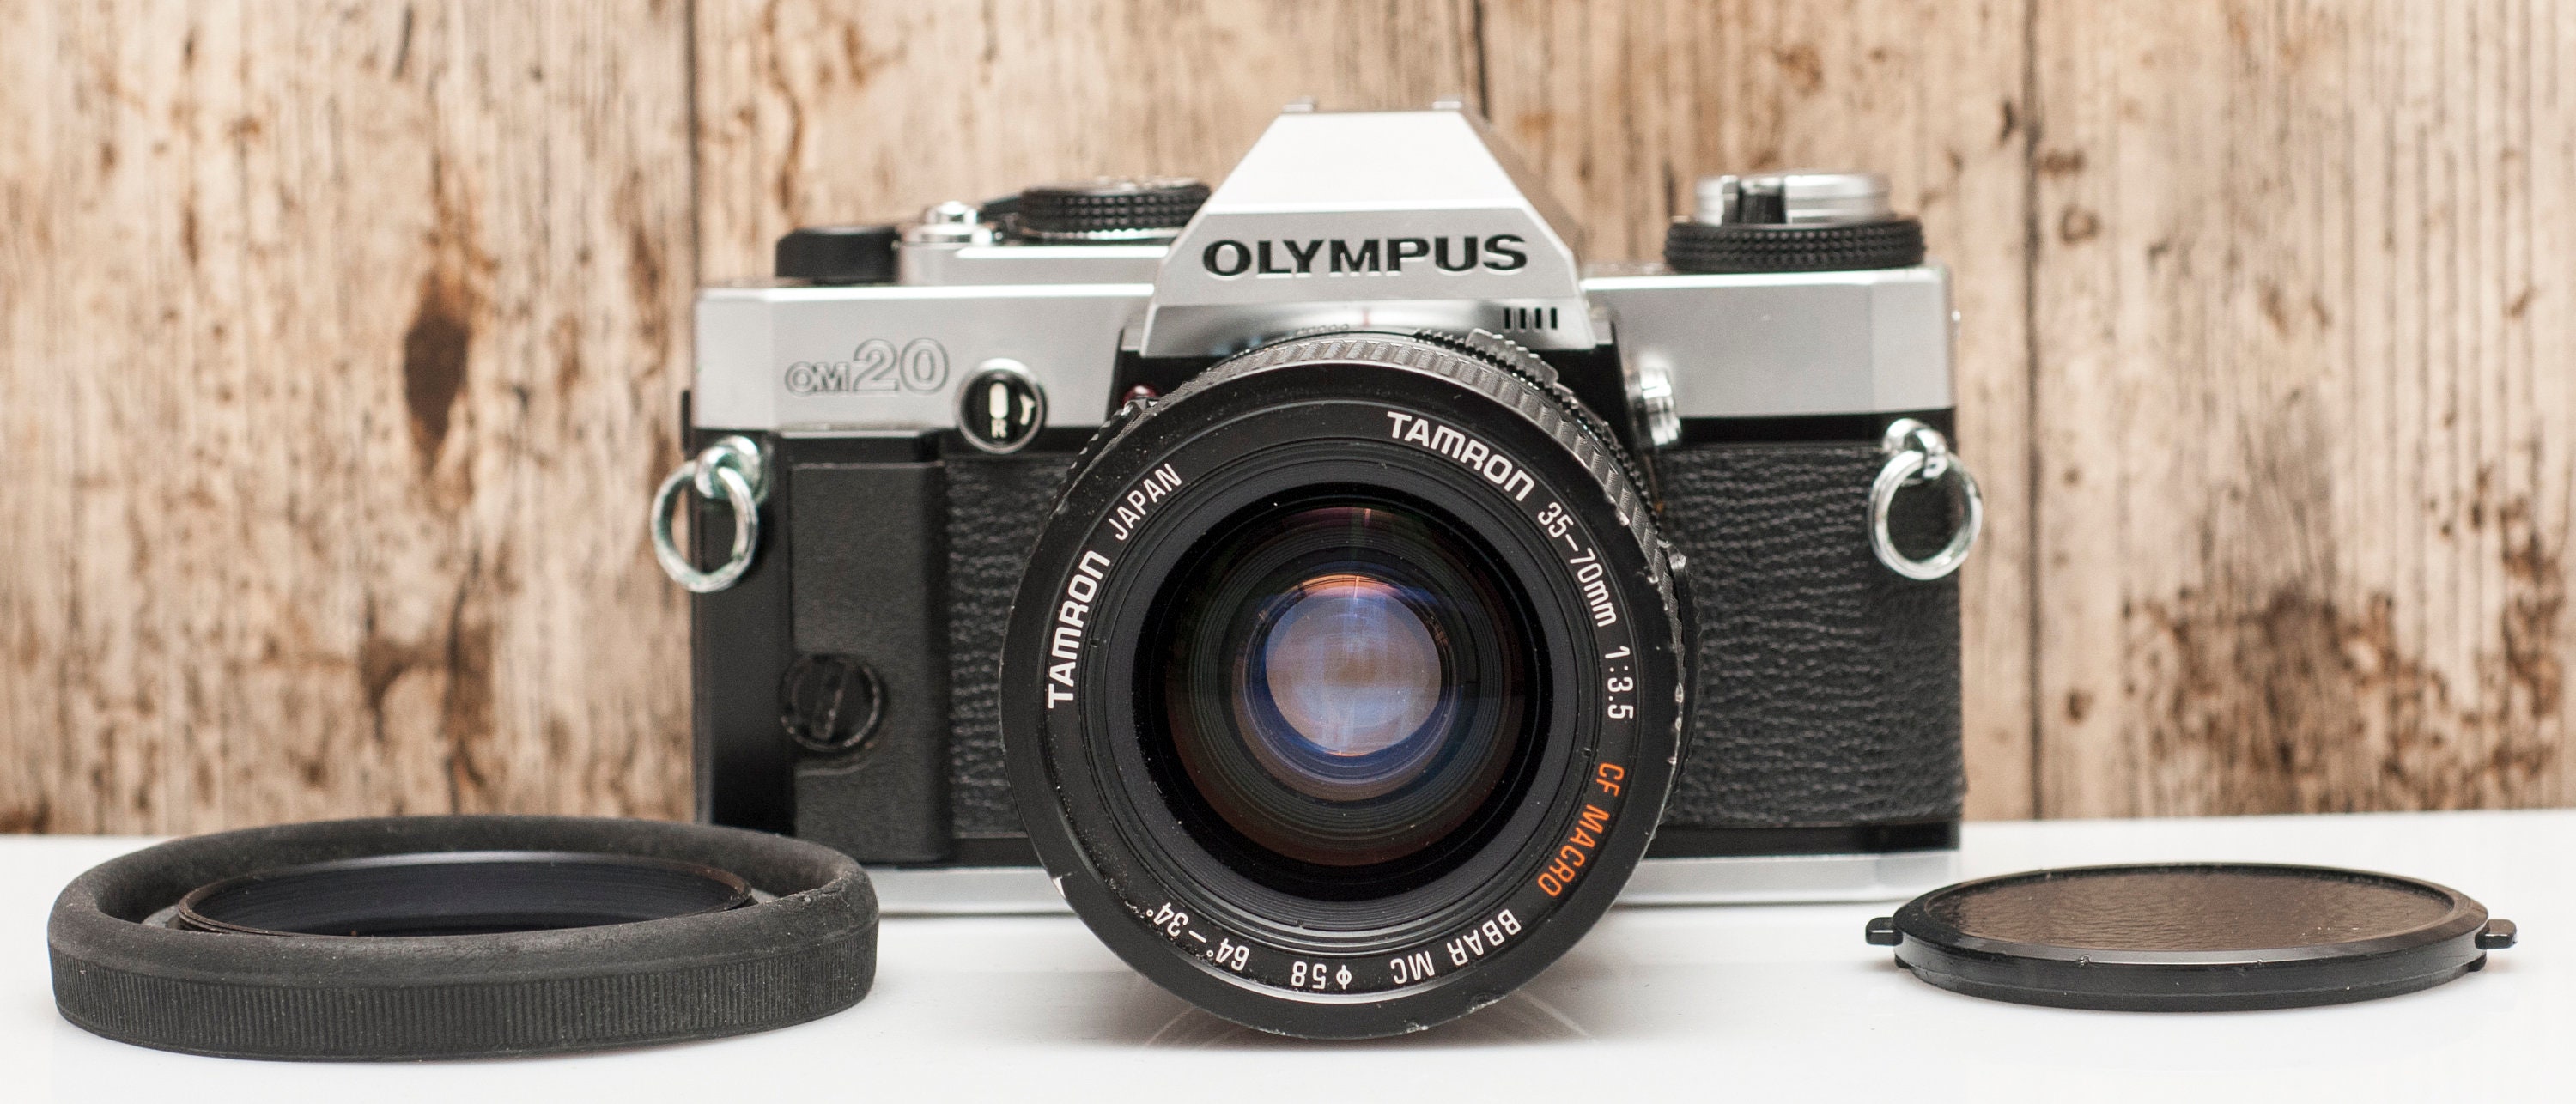 Olympus OM 20 with TAMRON CF macro lens 35-70 mm f3.5 - Etsy 日本